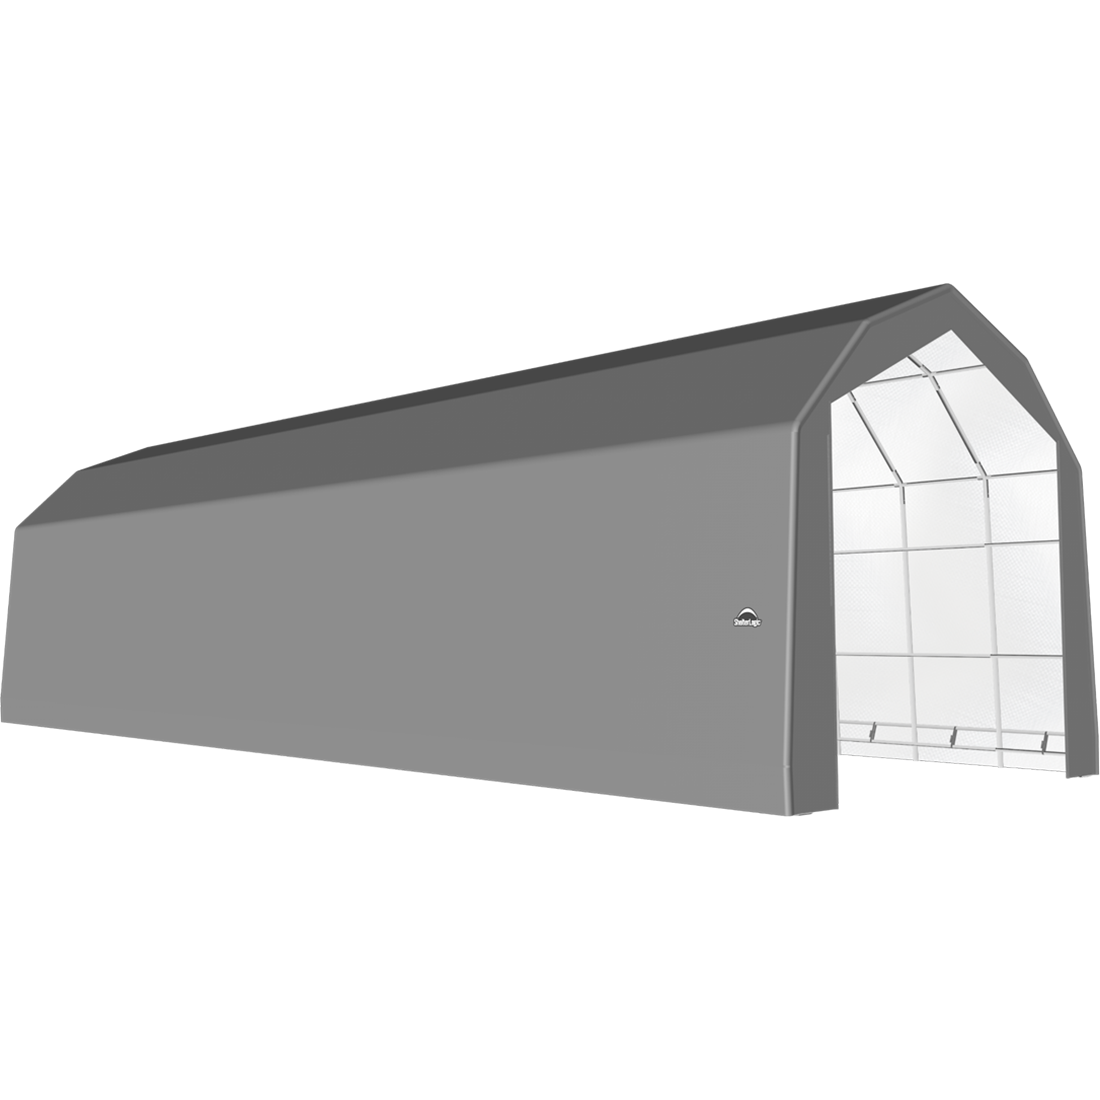 ShelterTech SP Series Barn Shelter, 20 ft. x 64 ft. x 18 ft. Heavy Duty PVC 14.5 oz. Gray